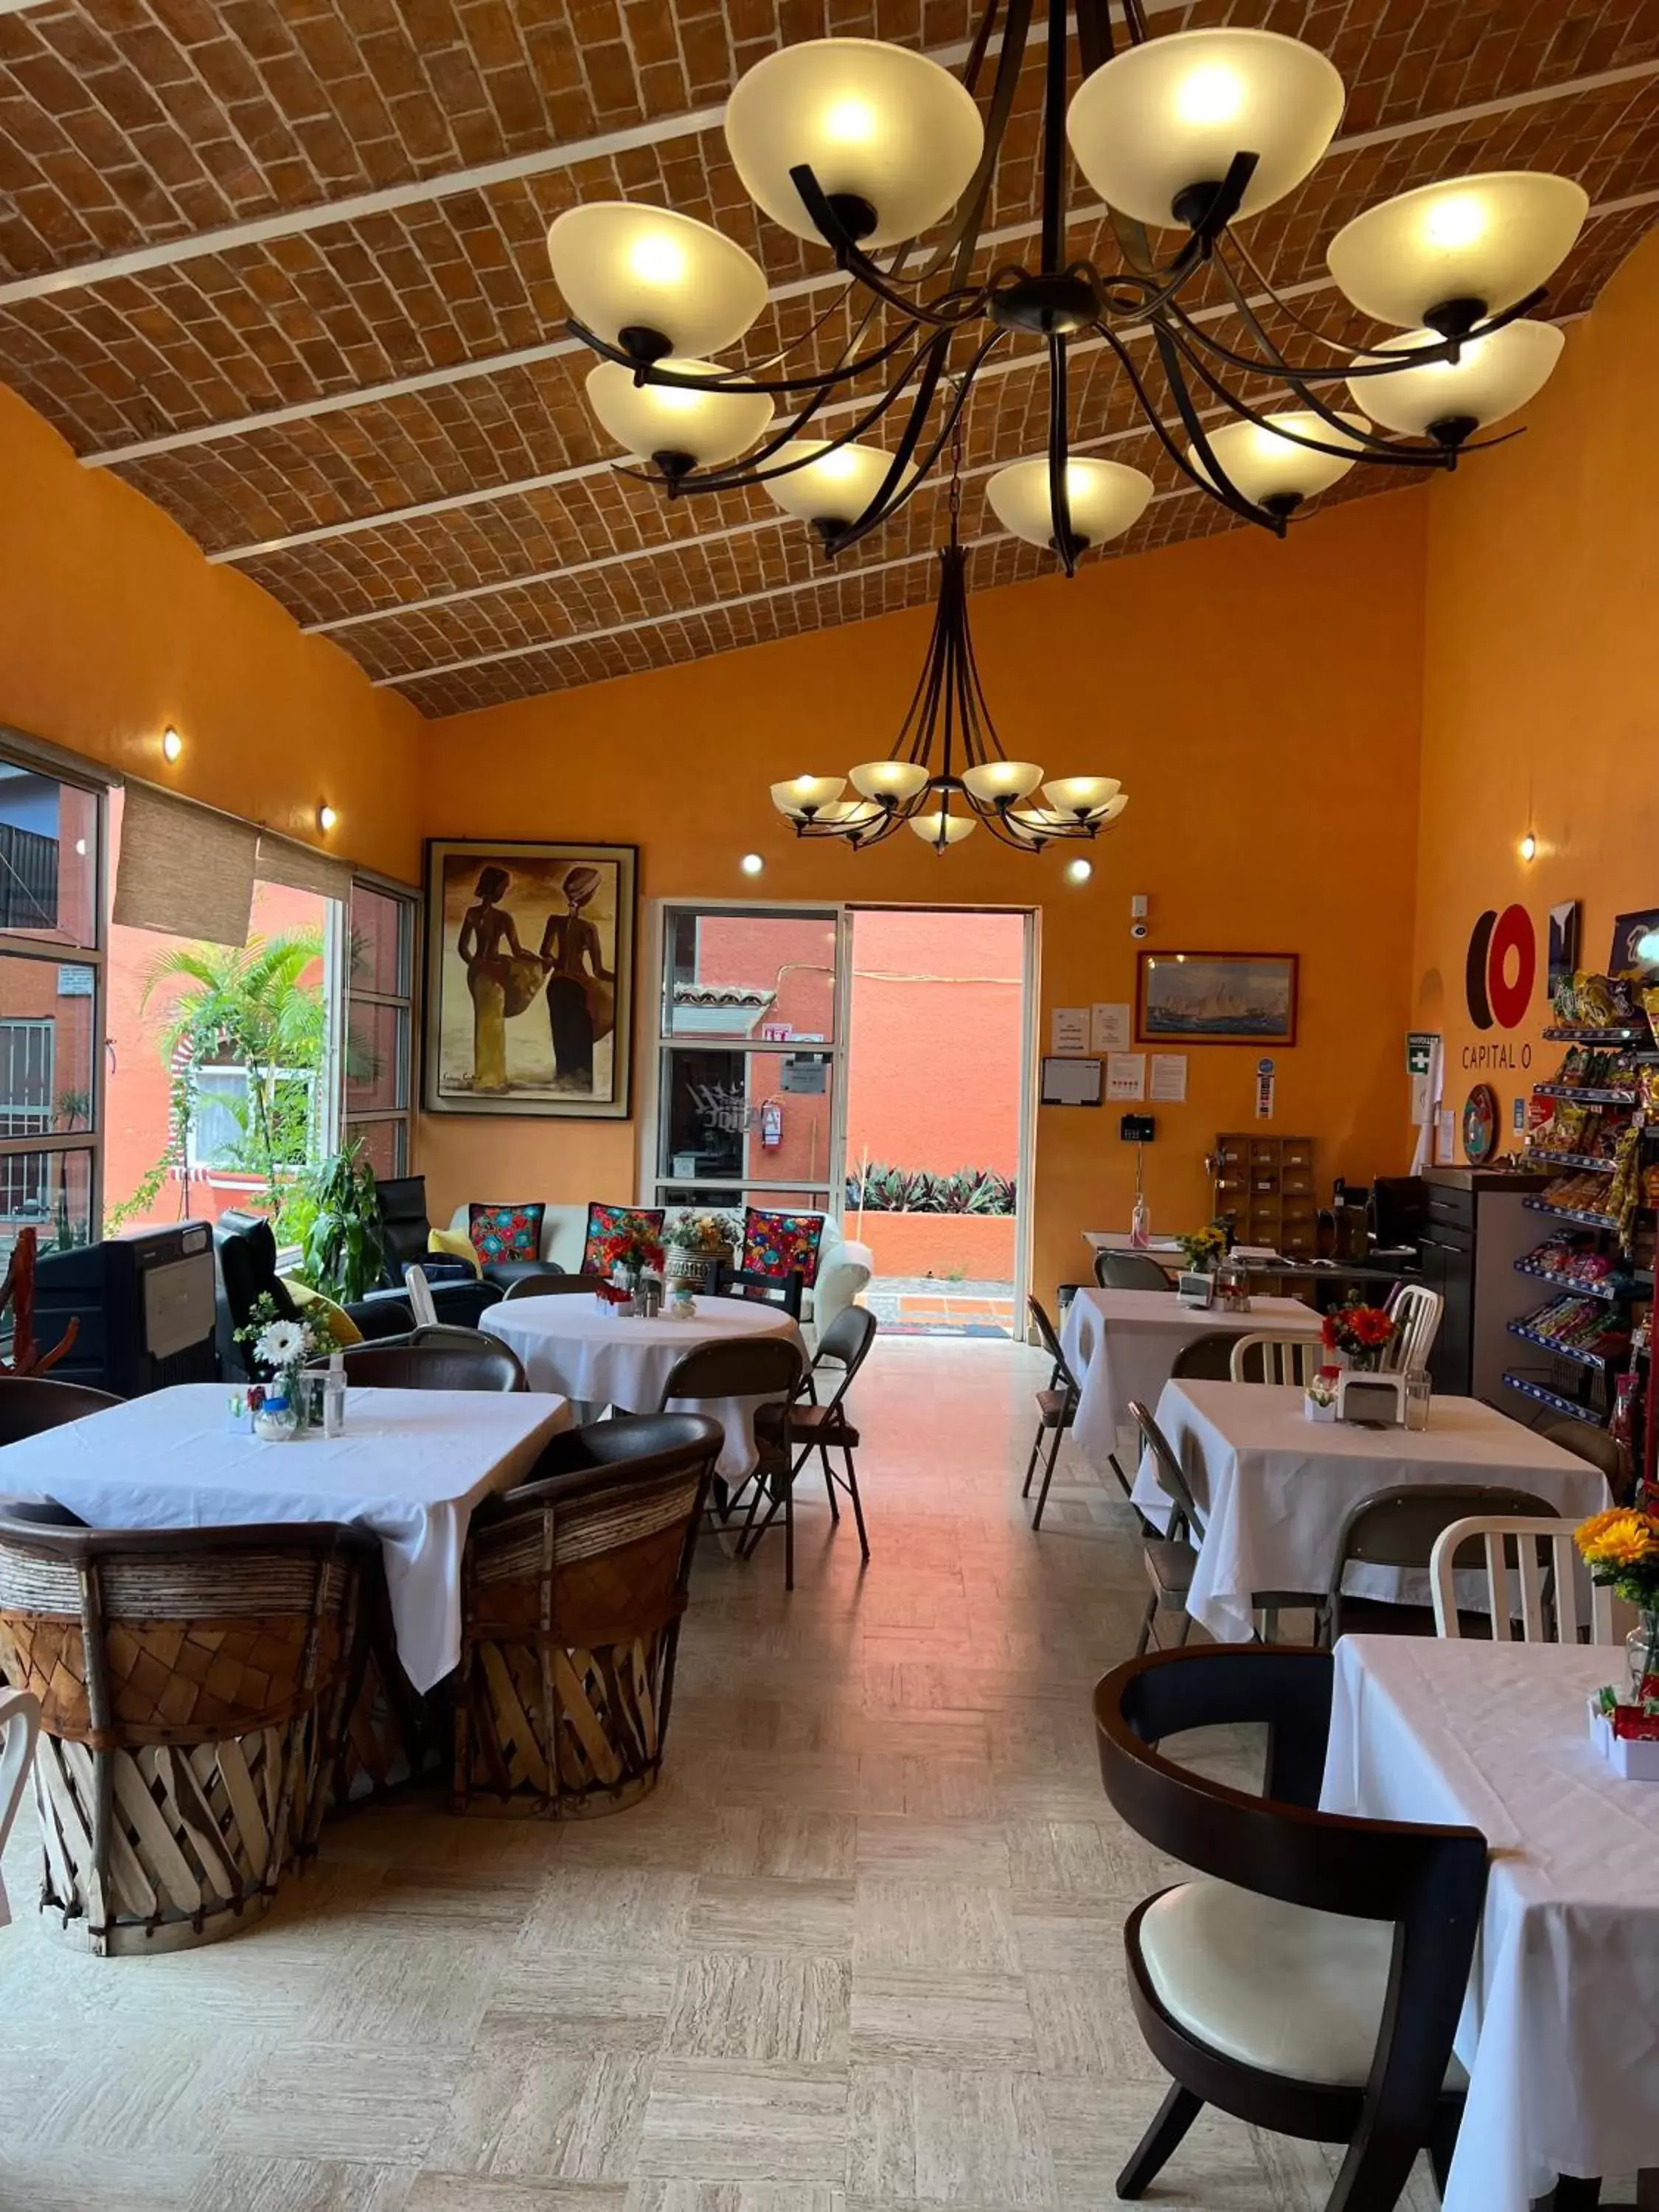 Breakfast, Restaurant/Places to Eat in Hotel Villas Ajijic, Ajijic Chapala Jalisco